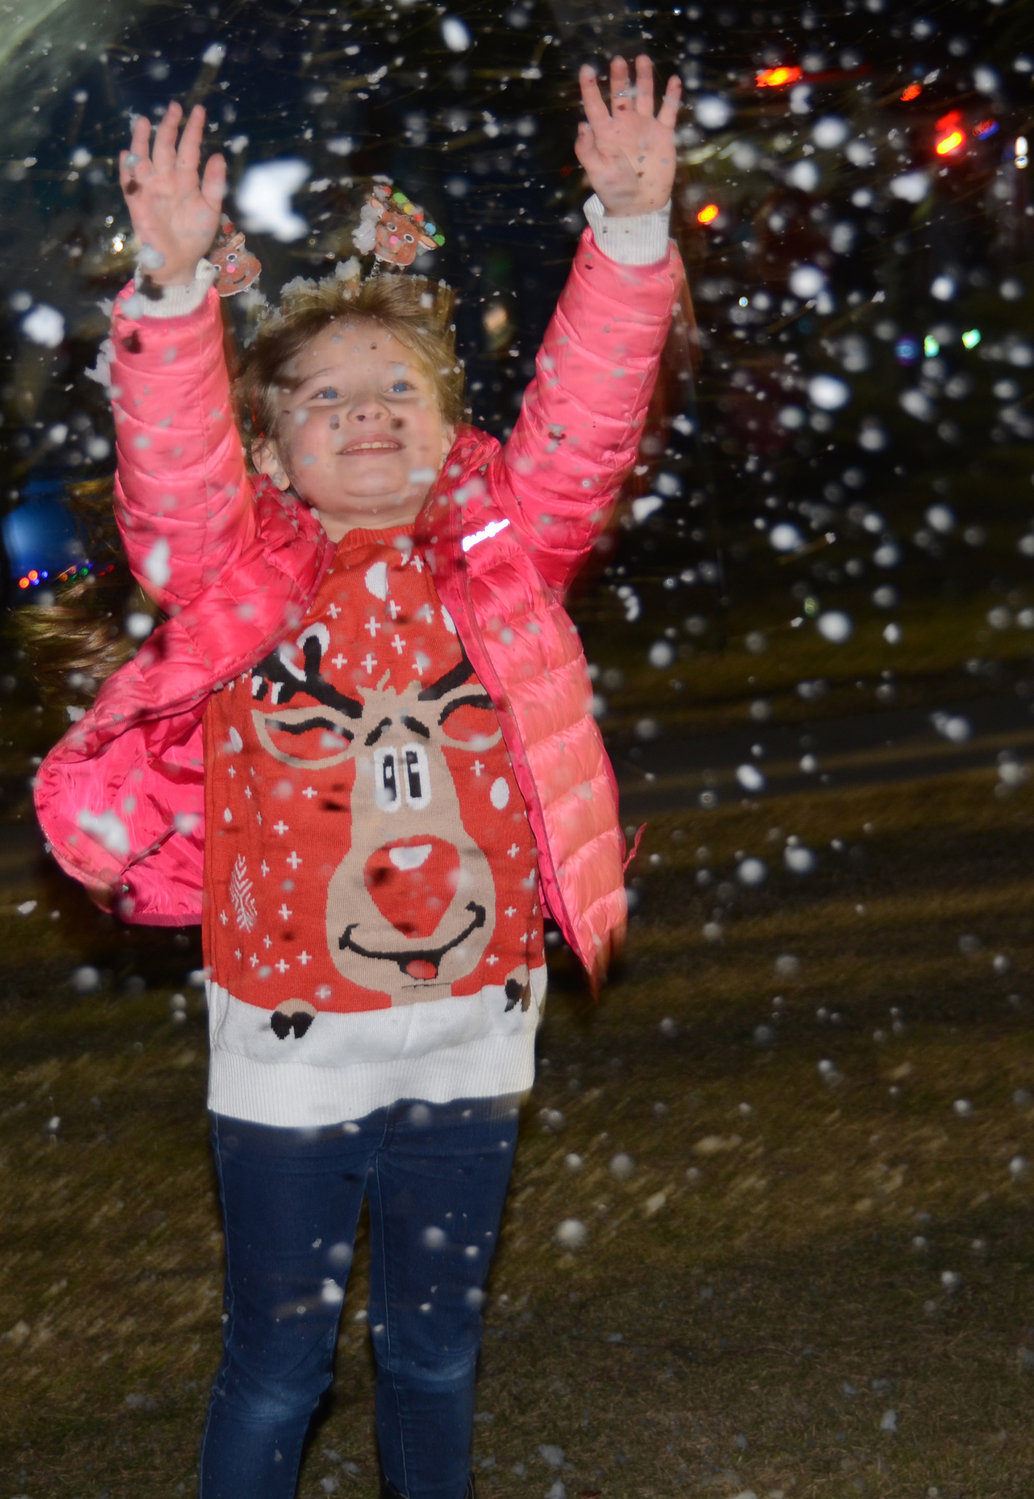 McCall Elementary School student Addison Bruns jumps and dances under an artificial snow machine.